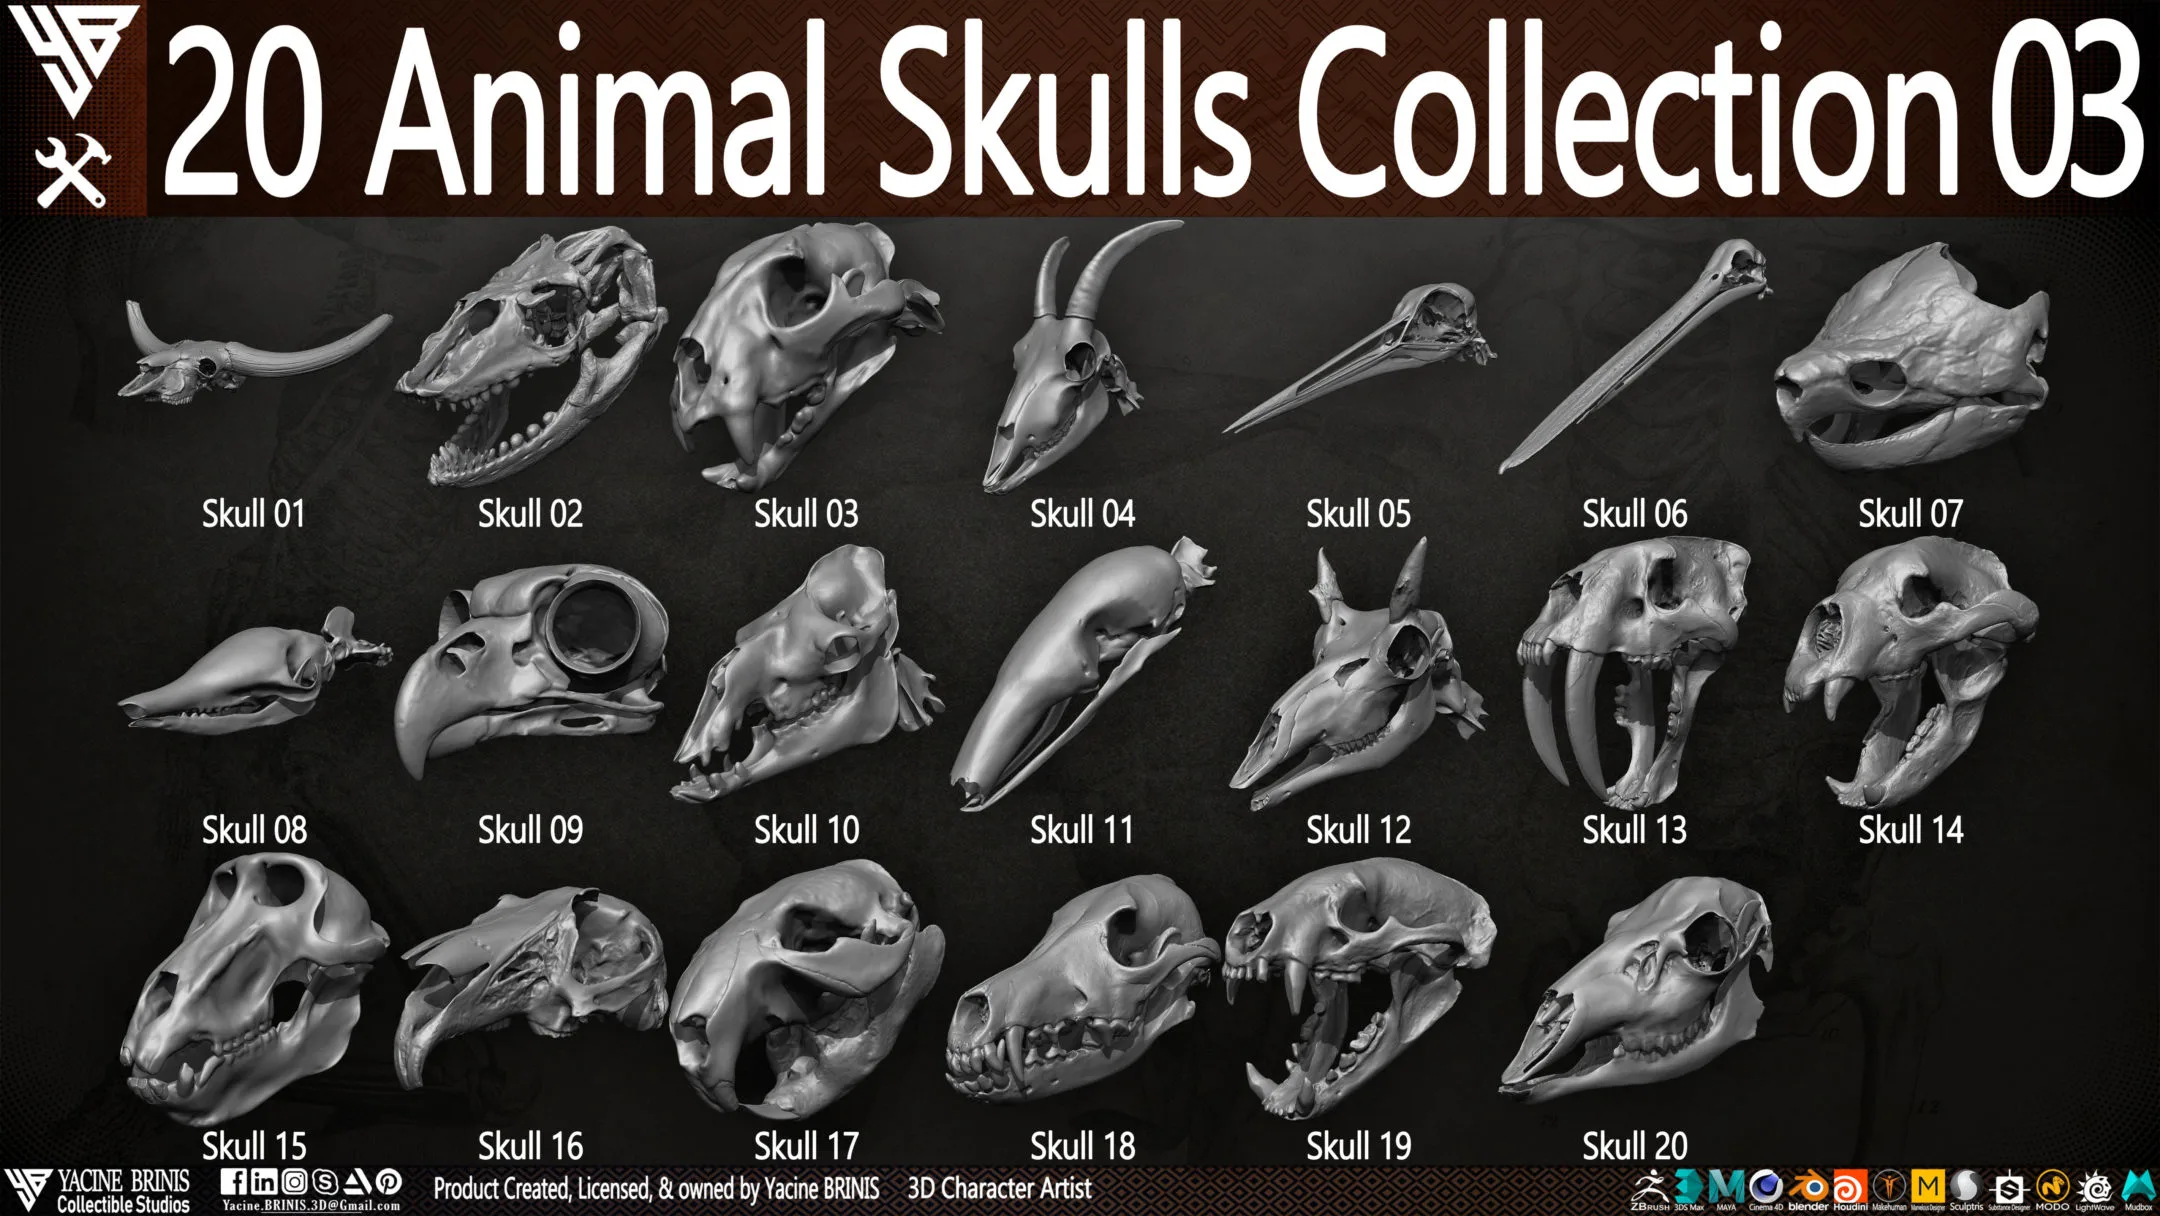 20 Animal Skulls Collection 03